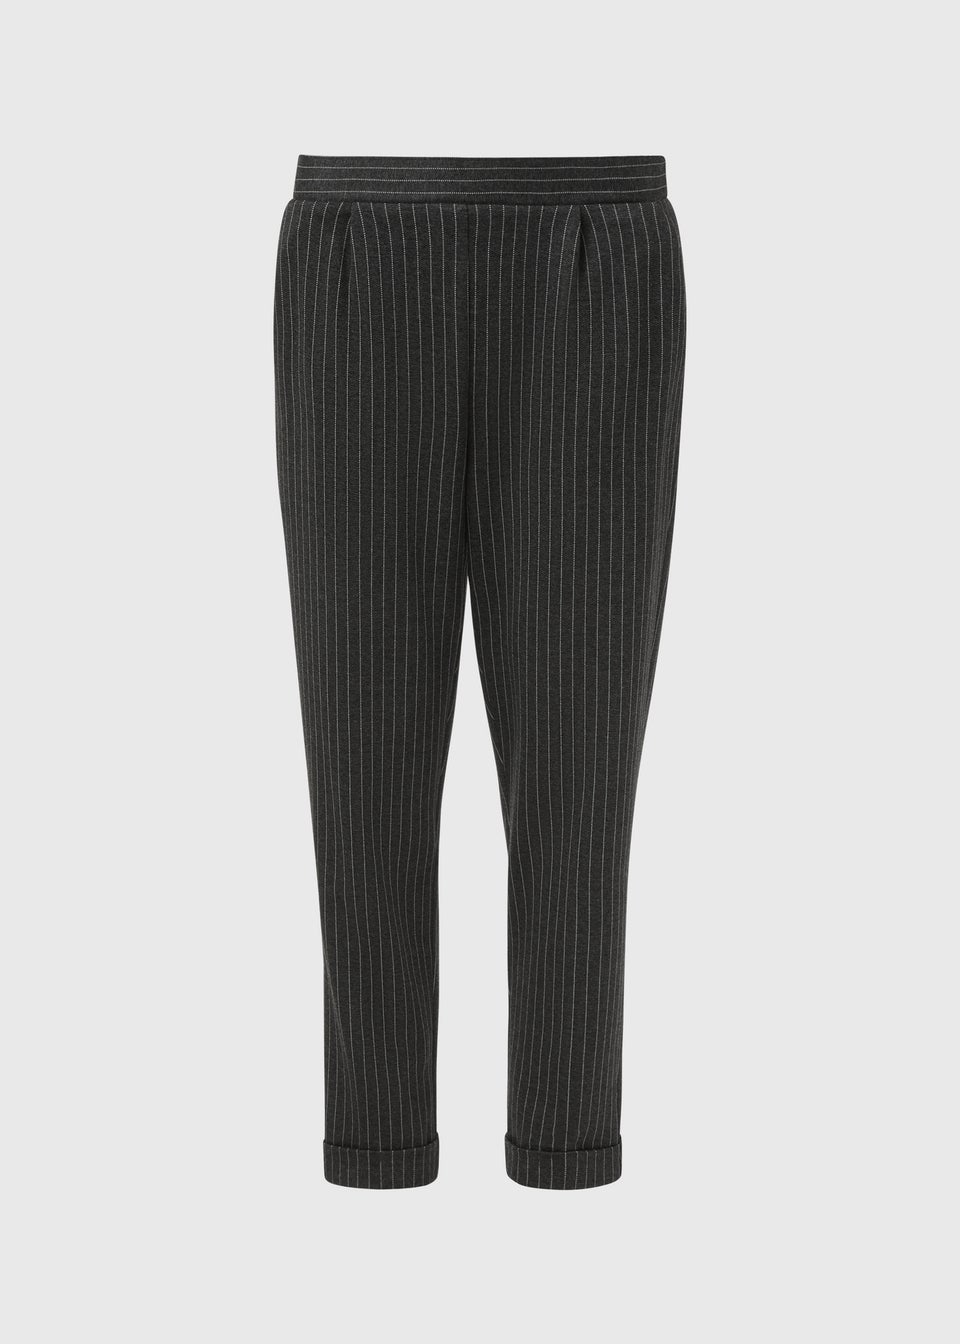 Charcoal Pinstripe Elasticated Waist Pants